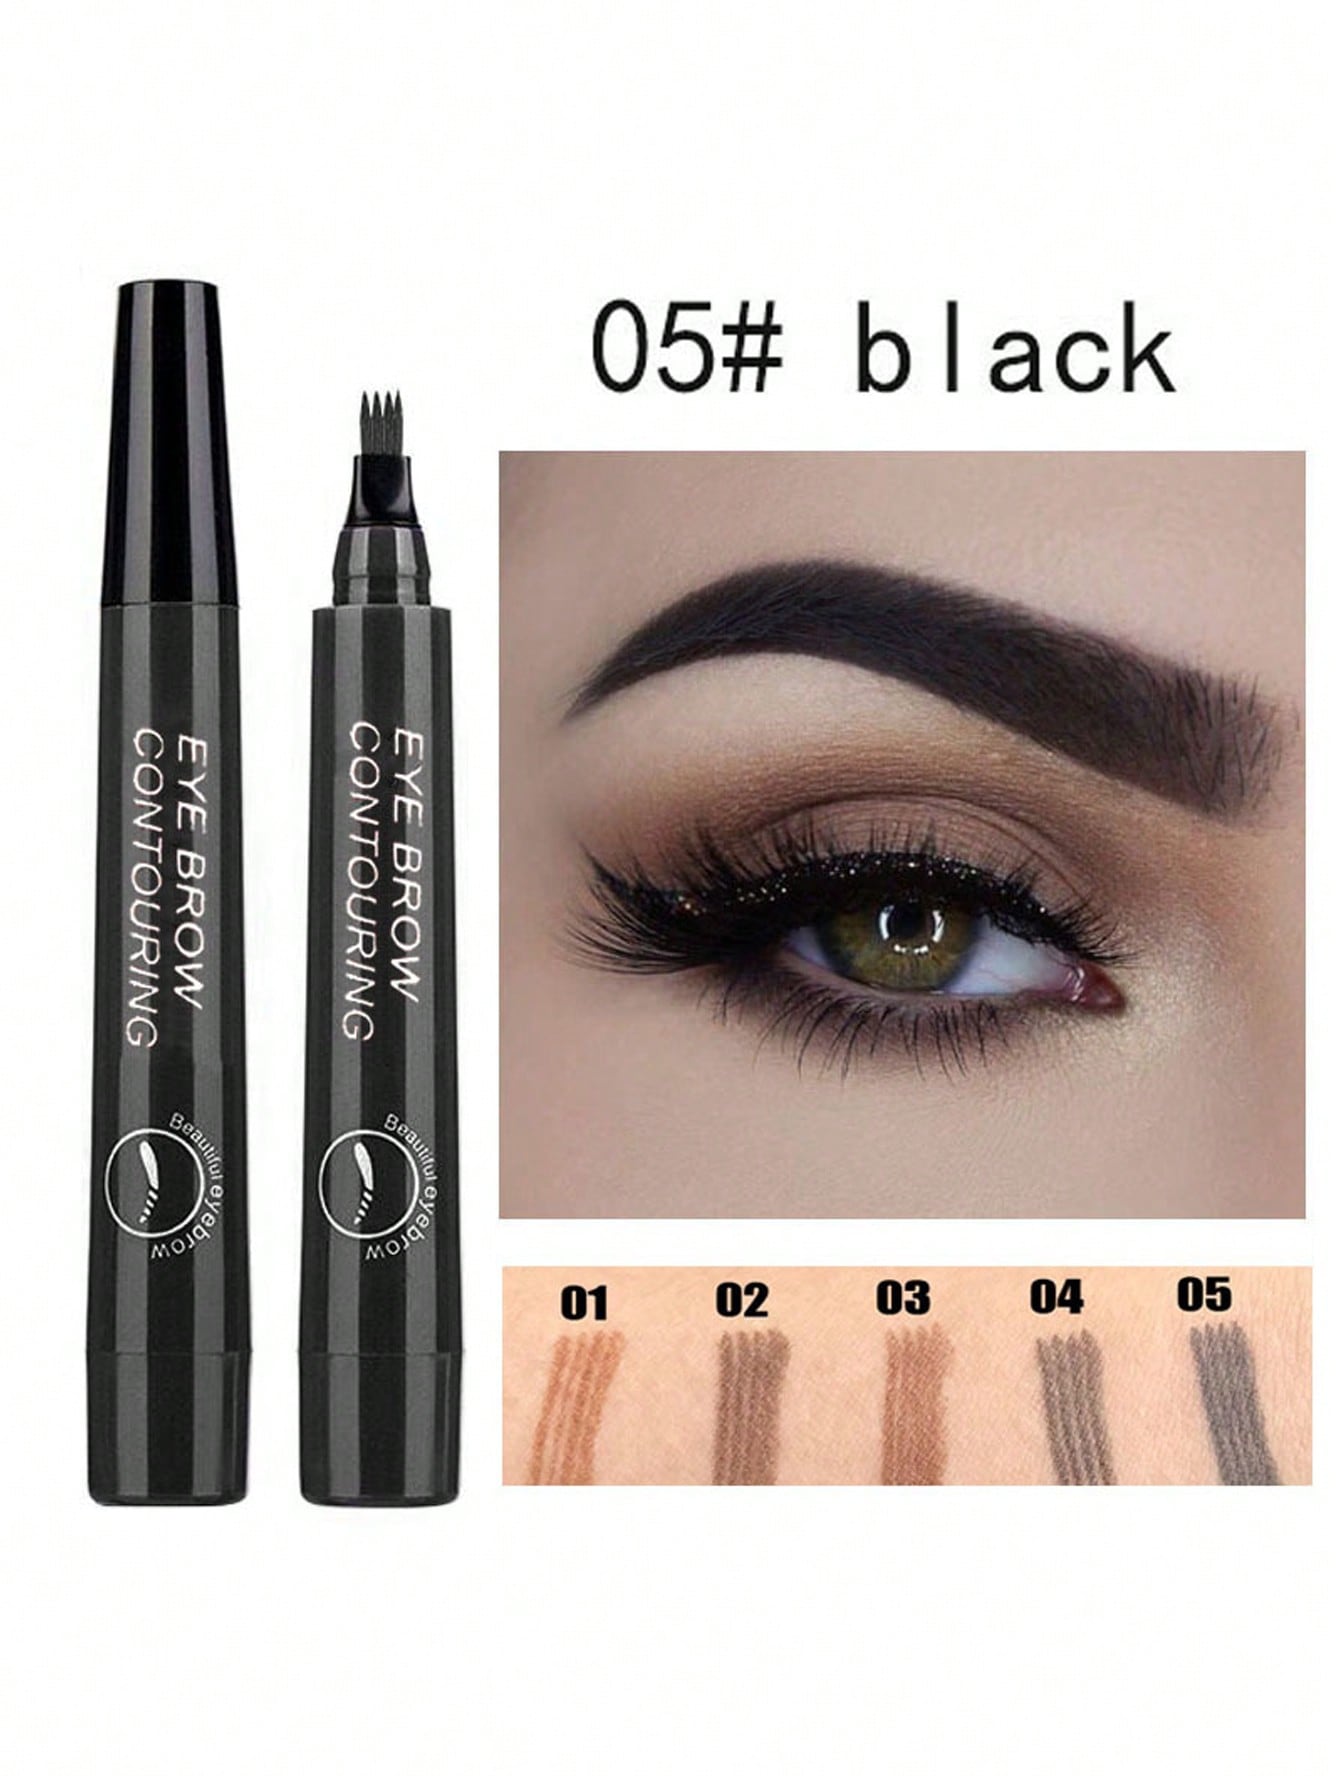 Waterproof Liquid Eyebrow Pen, Long-lasting Smudge Proof Eye Brow Makeup Product - Negative Apparel